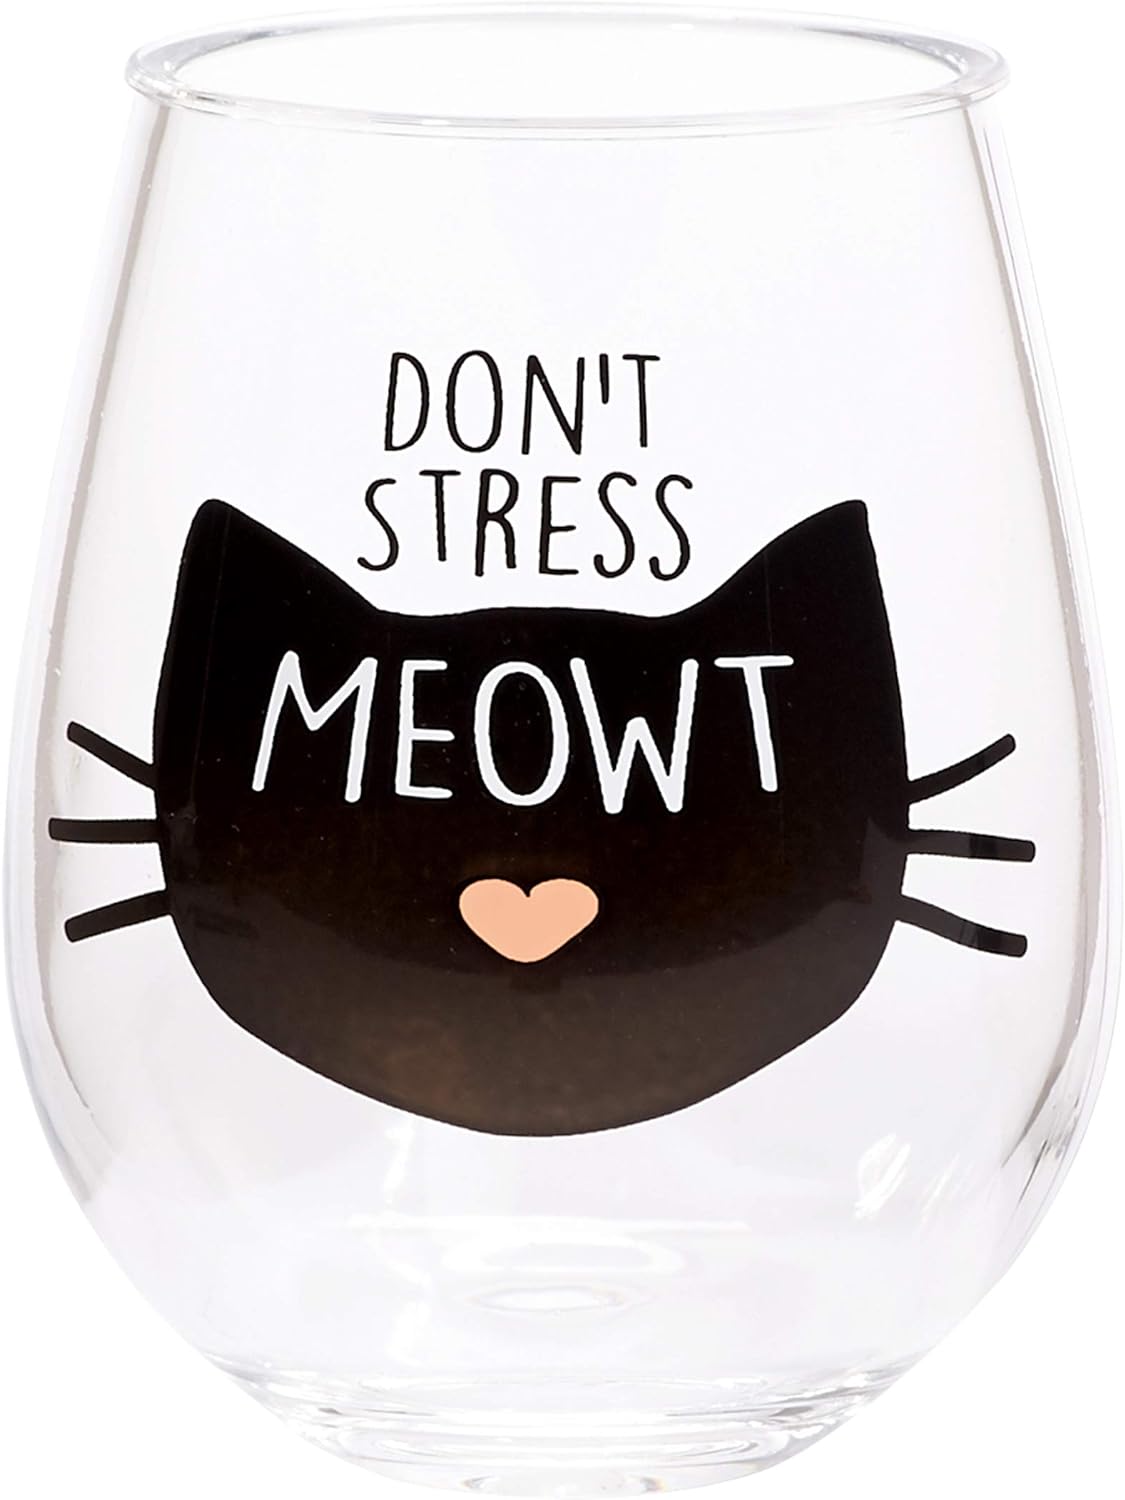 2pk 12oz "Don't Stress Meowt" Acrylic Wine Glasses - For Cat Lovers